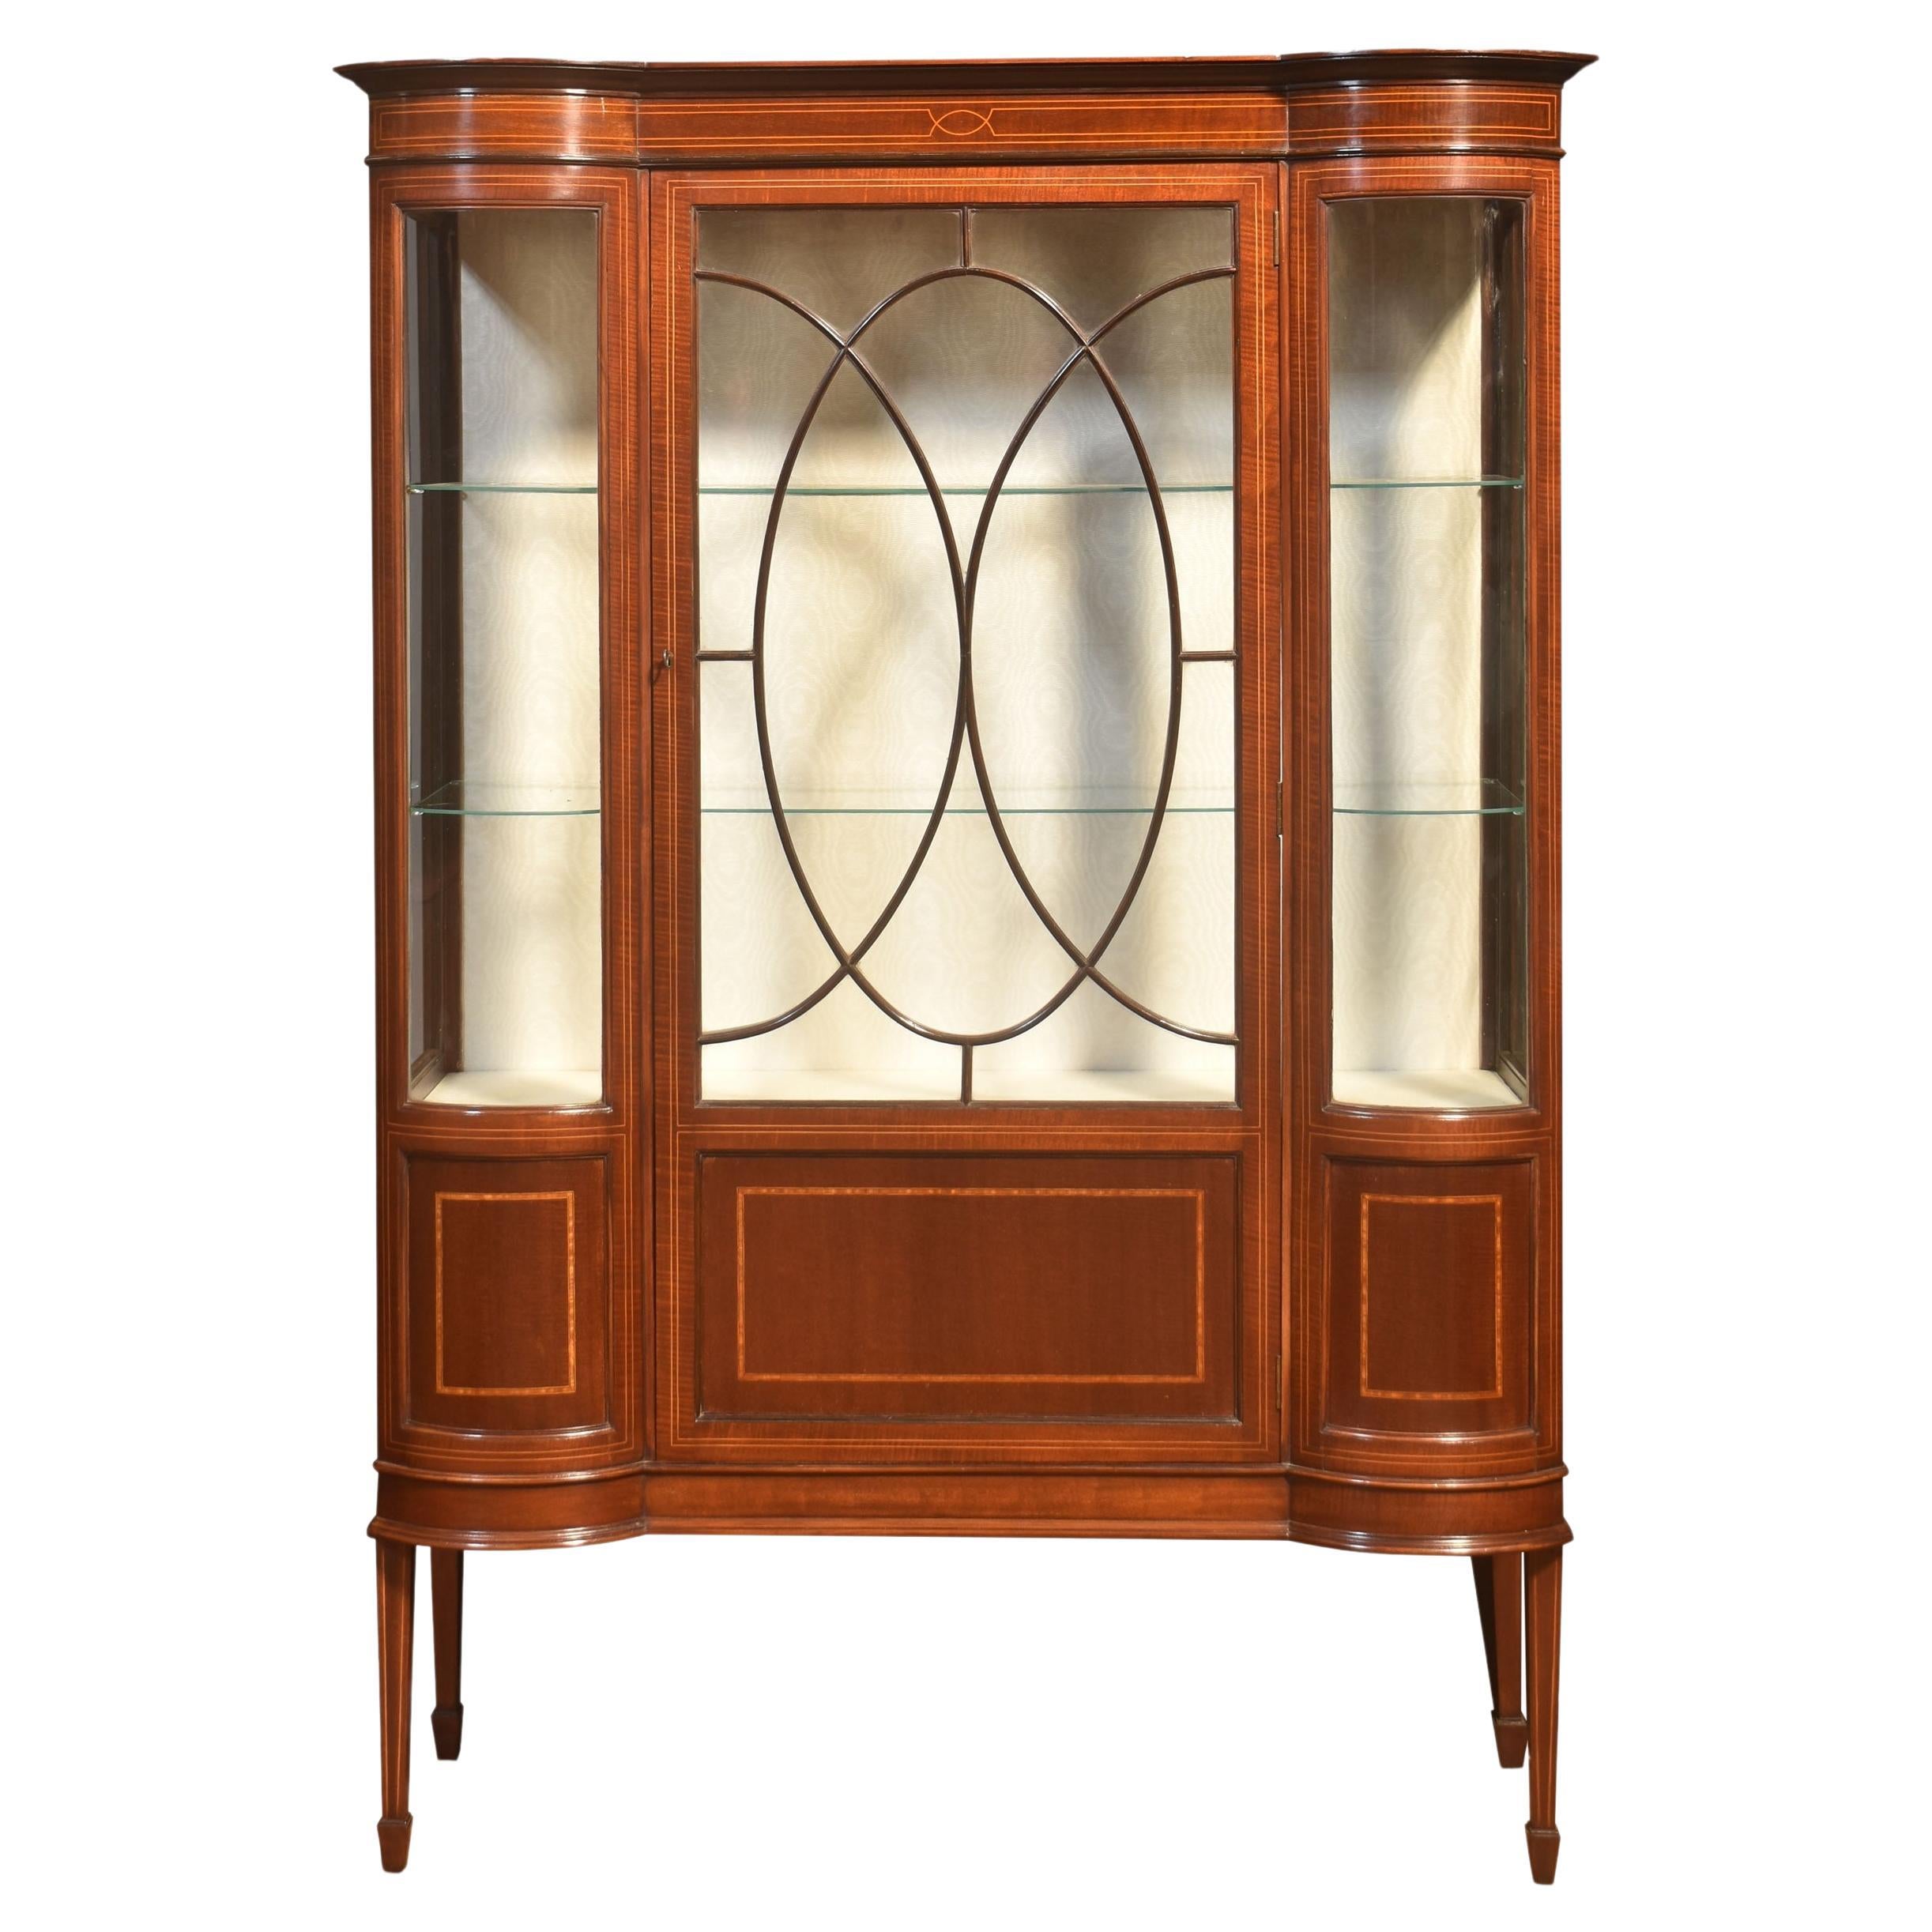 Mahogany inlaid display cabinet